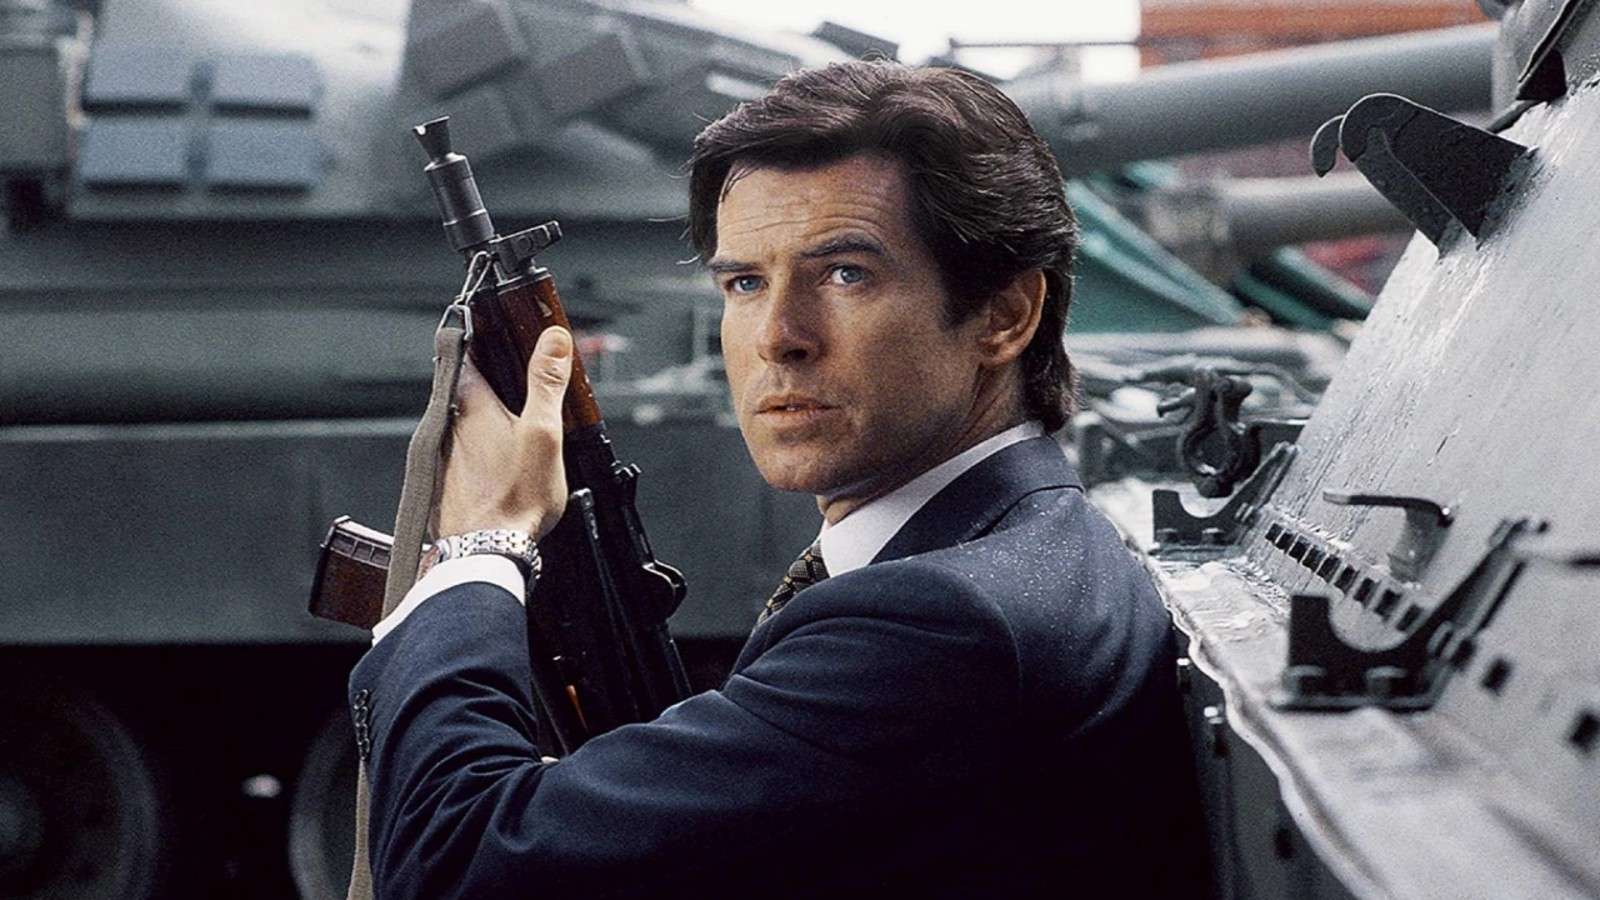 Pierce Brosnan holding a gun, on a tank, as James Bond.